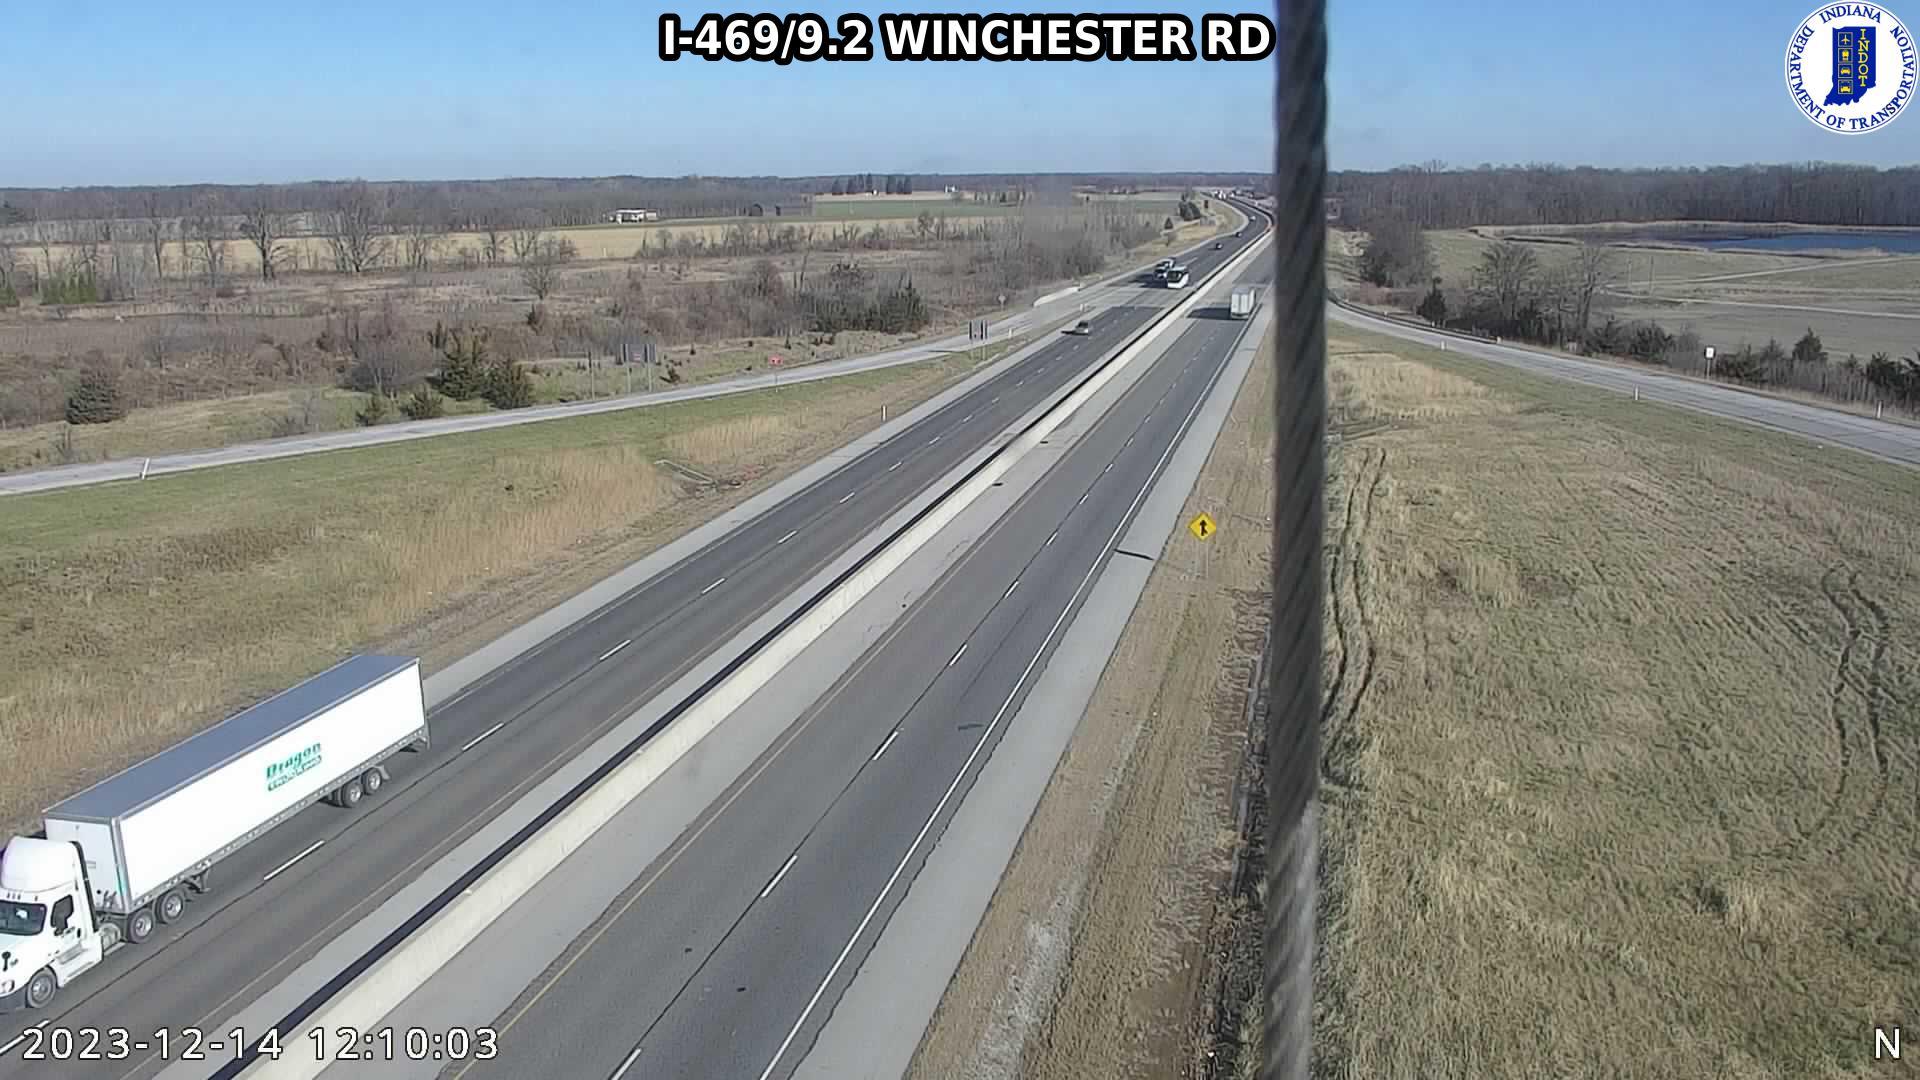 Traffic Cam Hessen Cassel: I-469: I-469/9.2 WINCHESTER RD